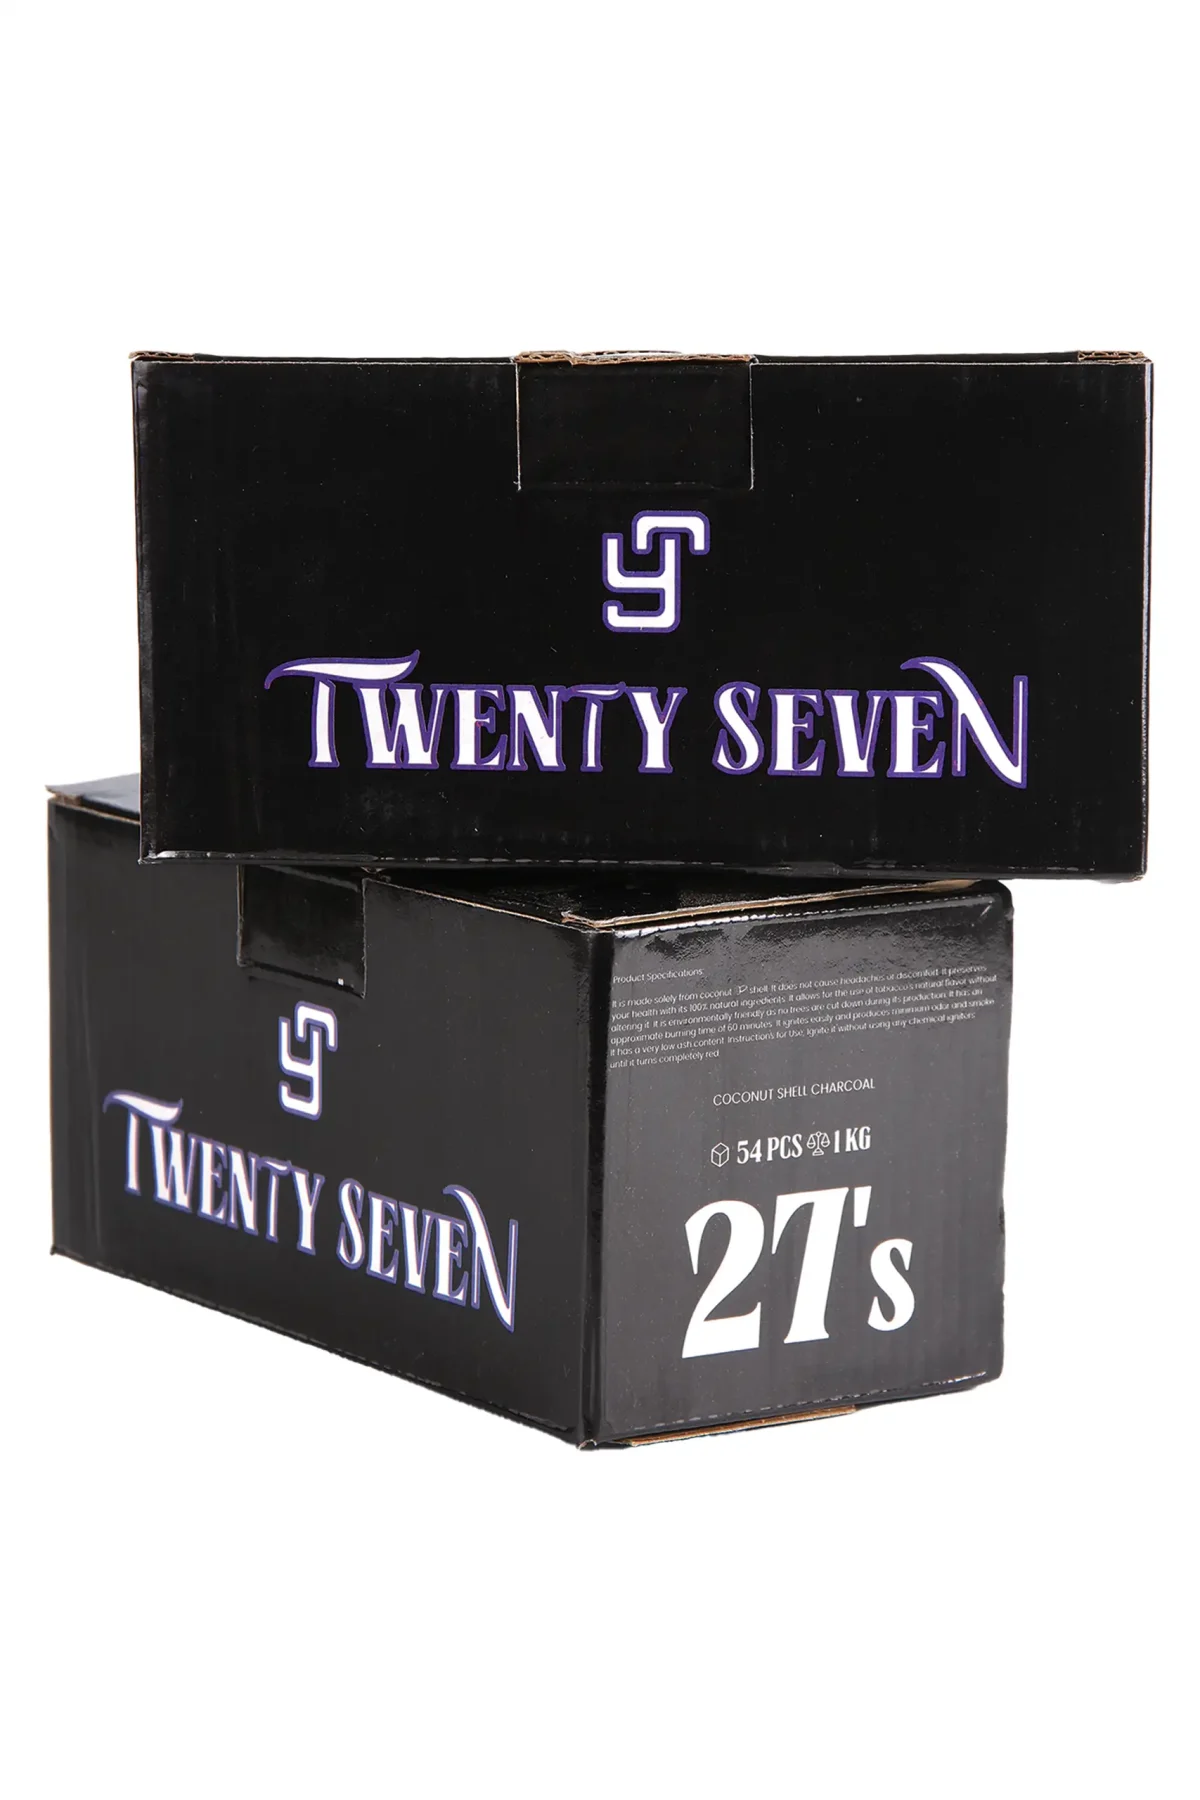 Yt 27’s Twenty Seven Küp Kömür